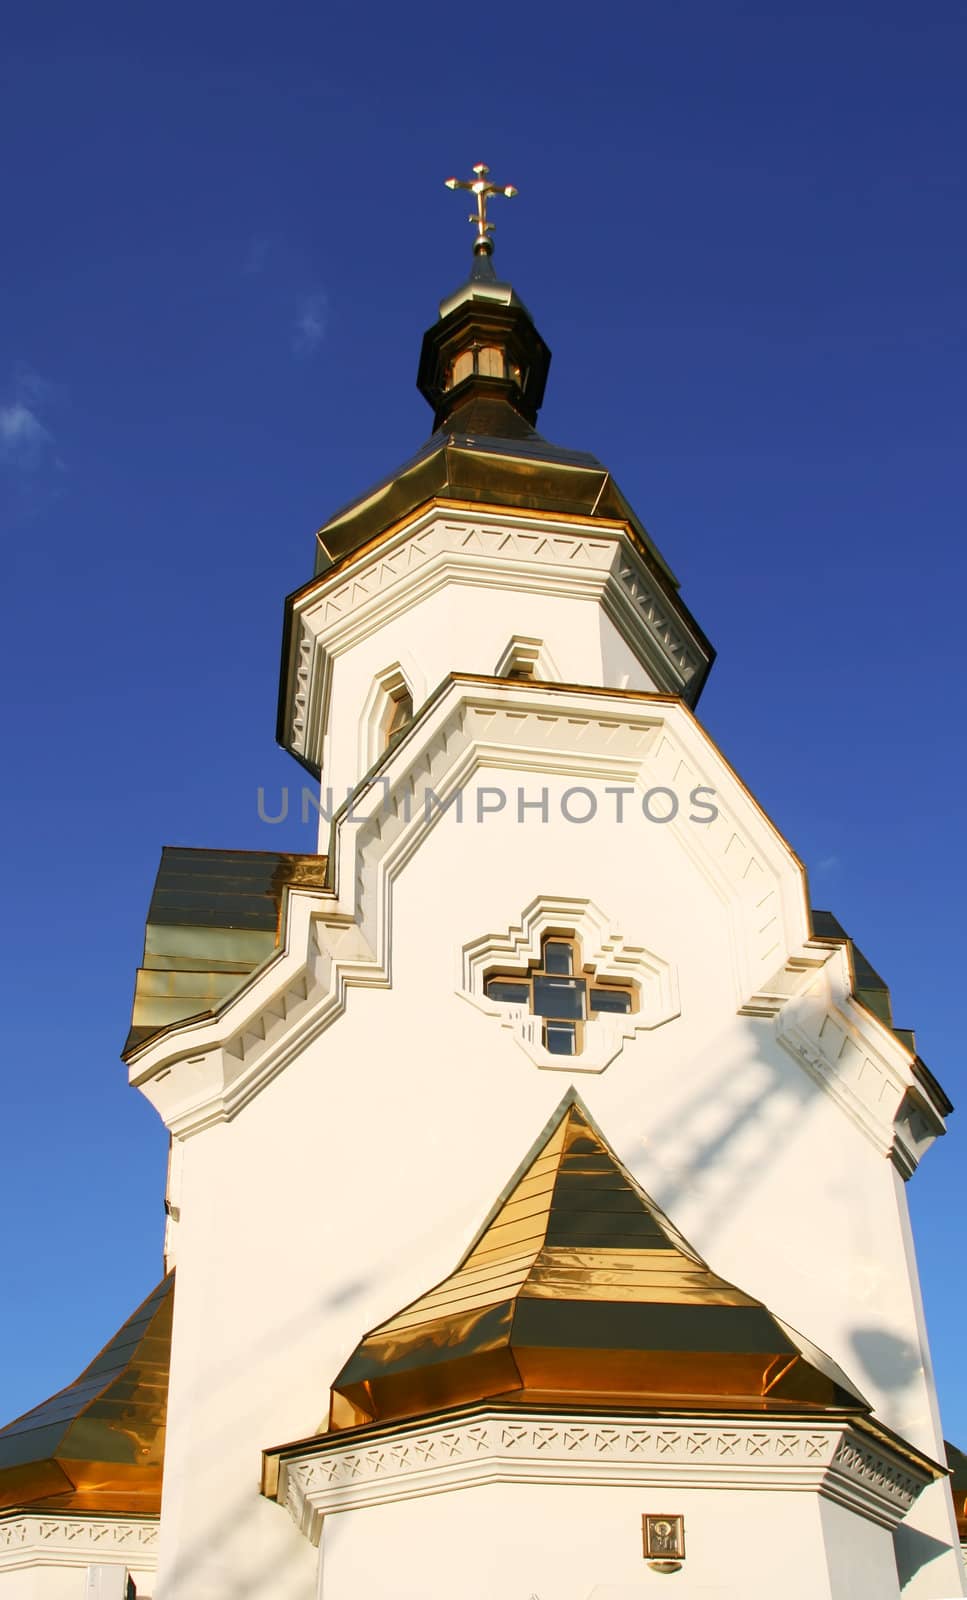 Small church on Dniepr river in Kiev, Ukraine